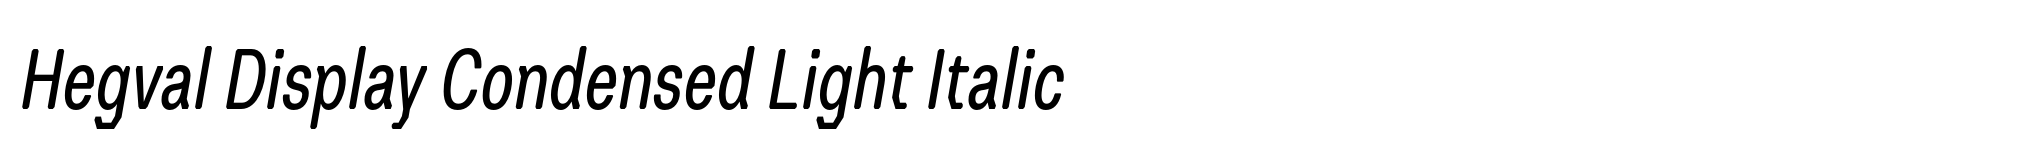 Hegval Display Condensed Light Italic image